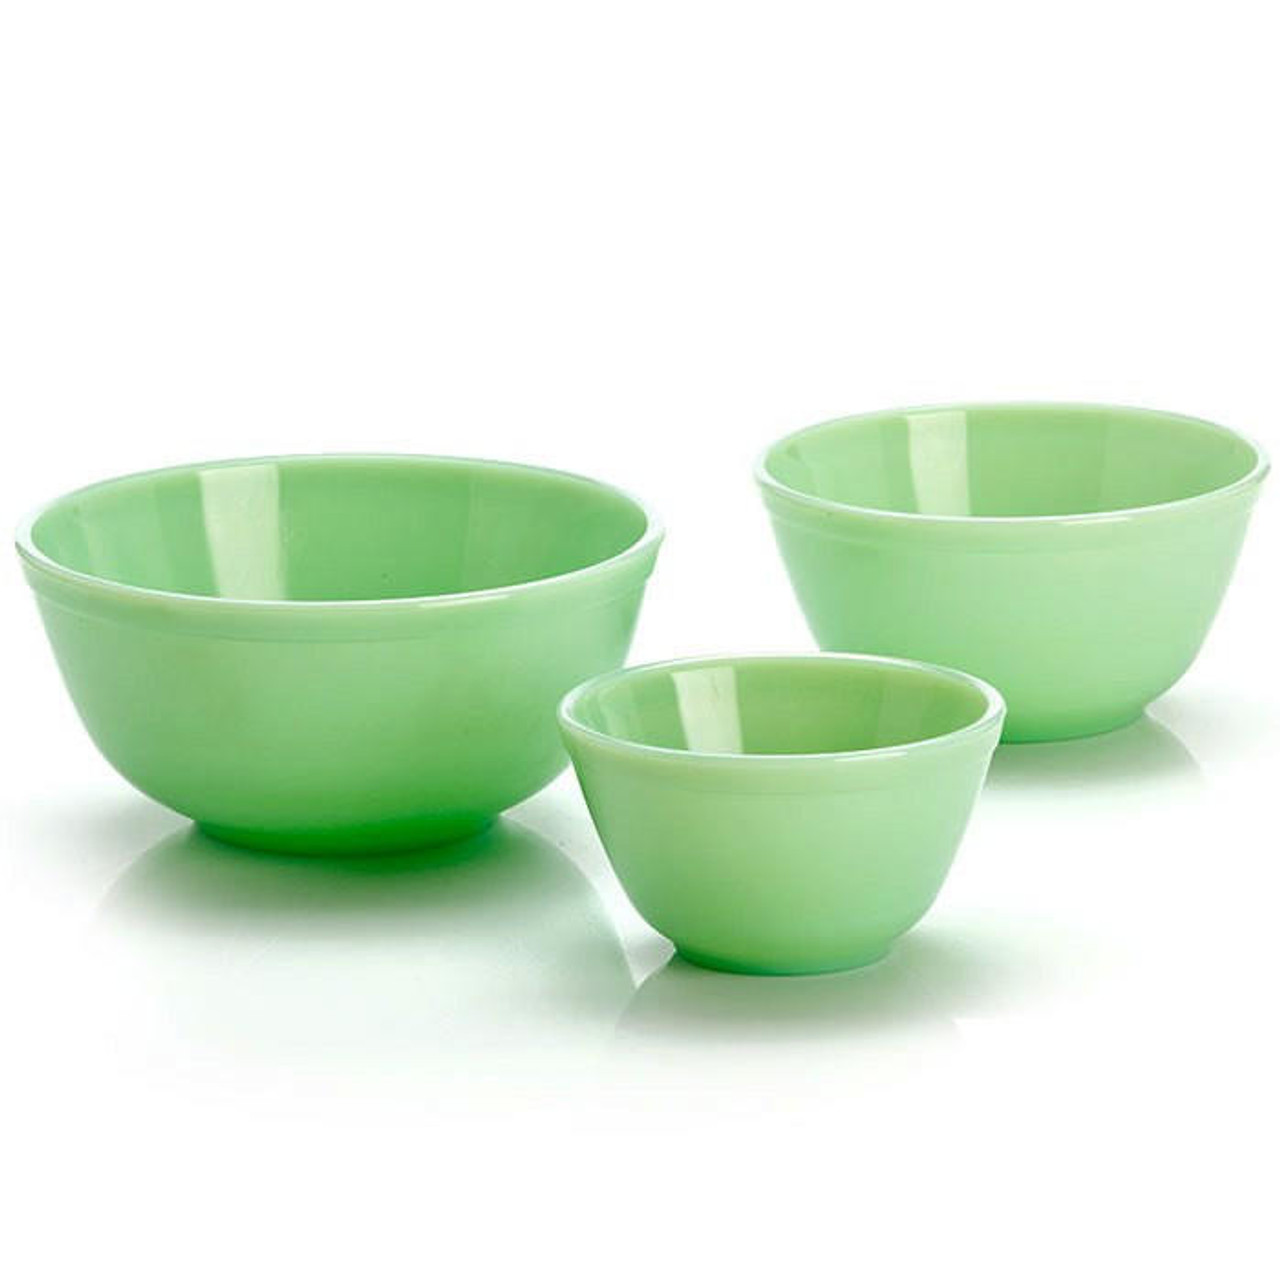 Nesting Mixing Bowls - Jadeite Green Glass, 3 Piece